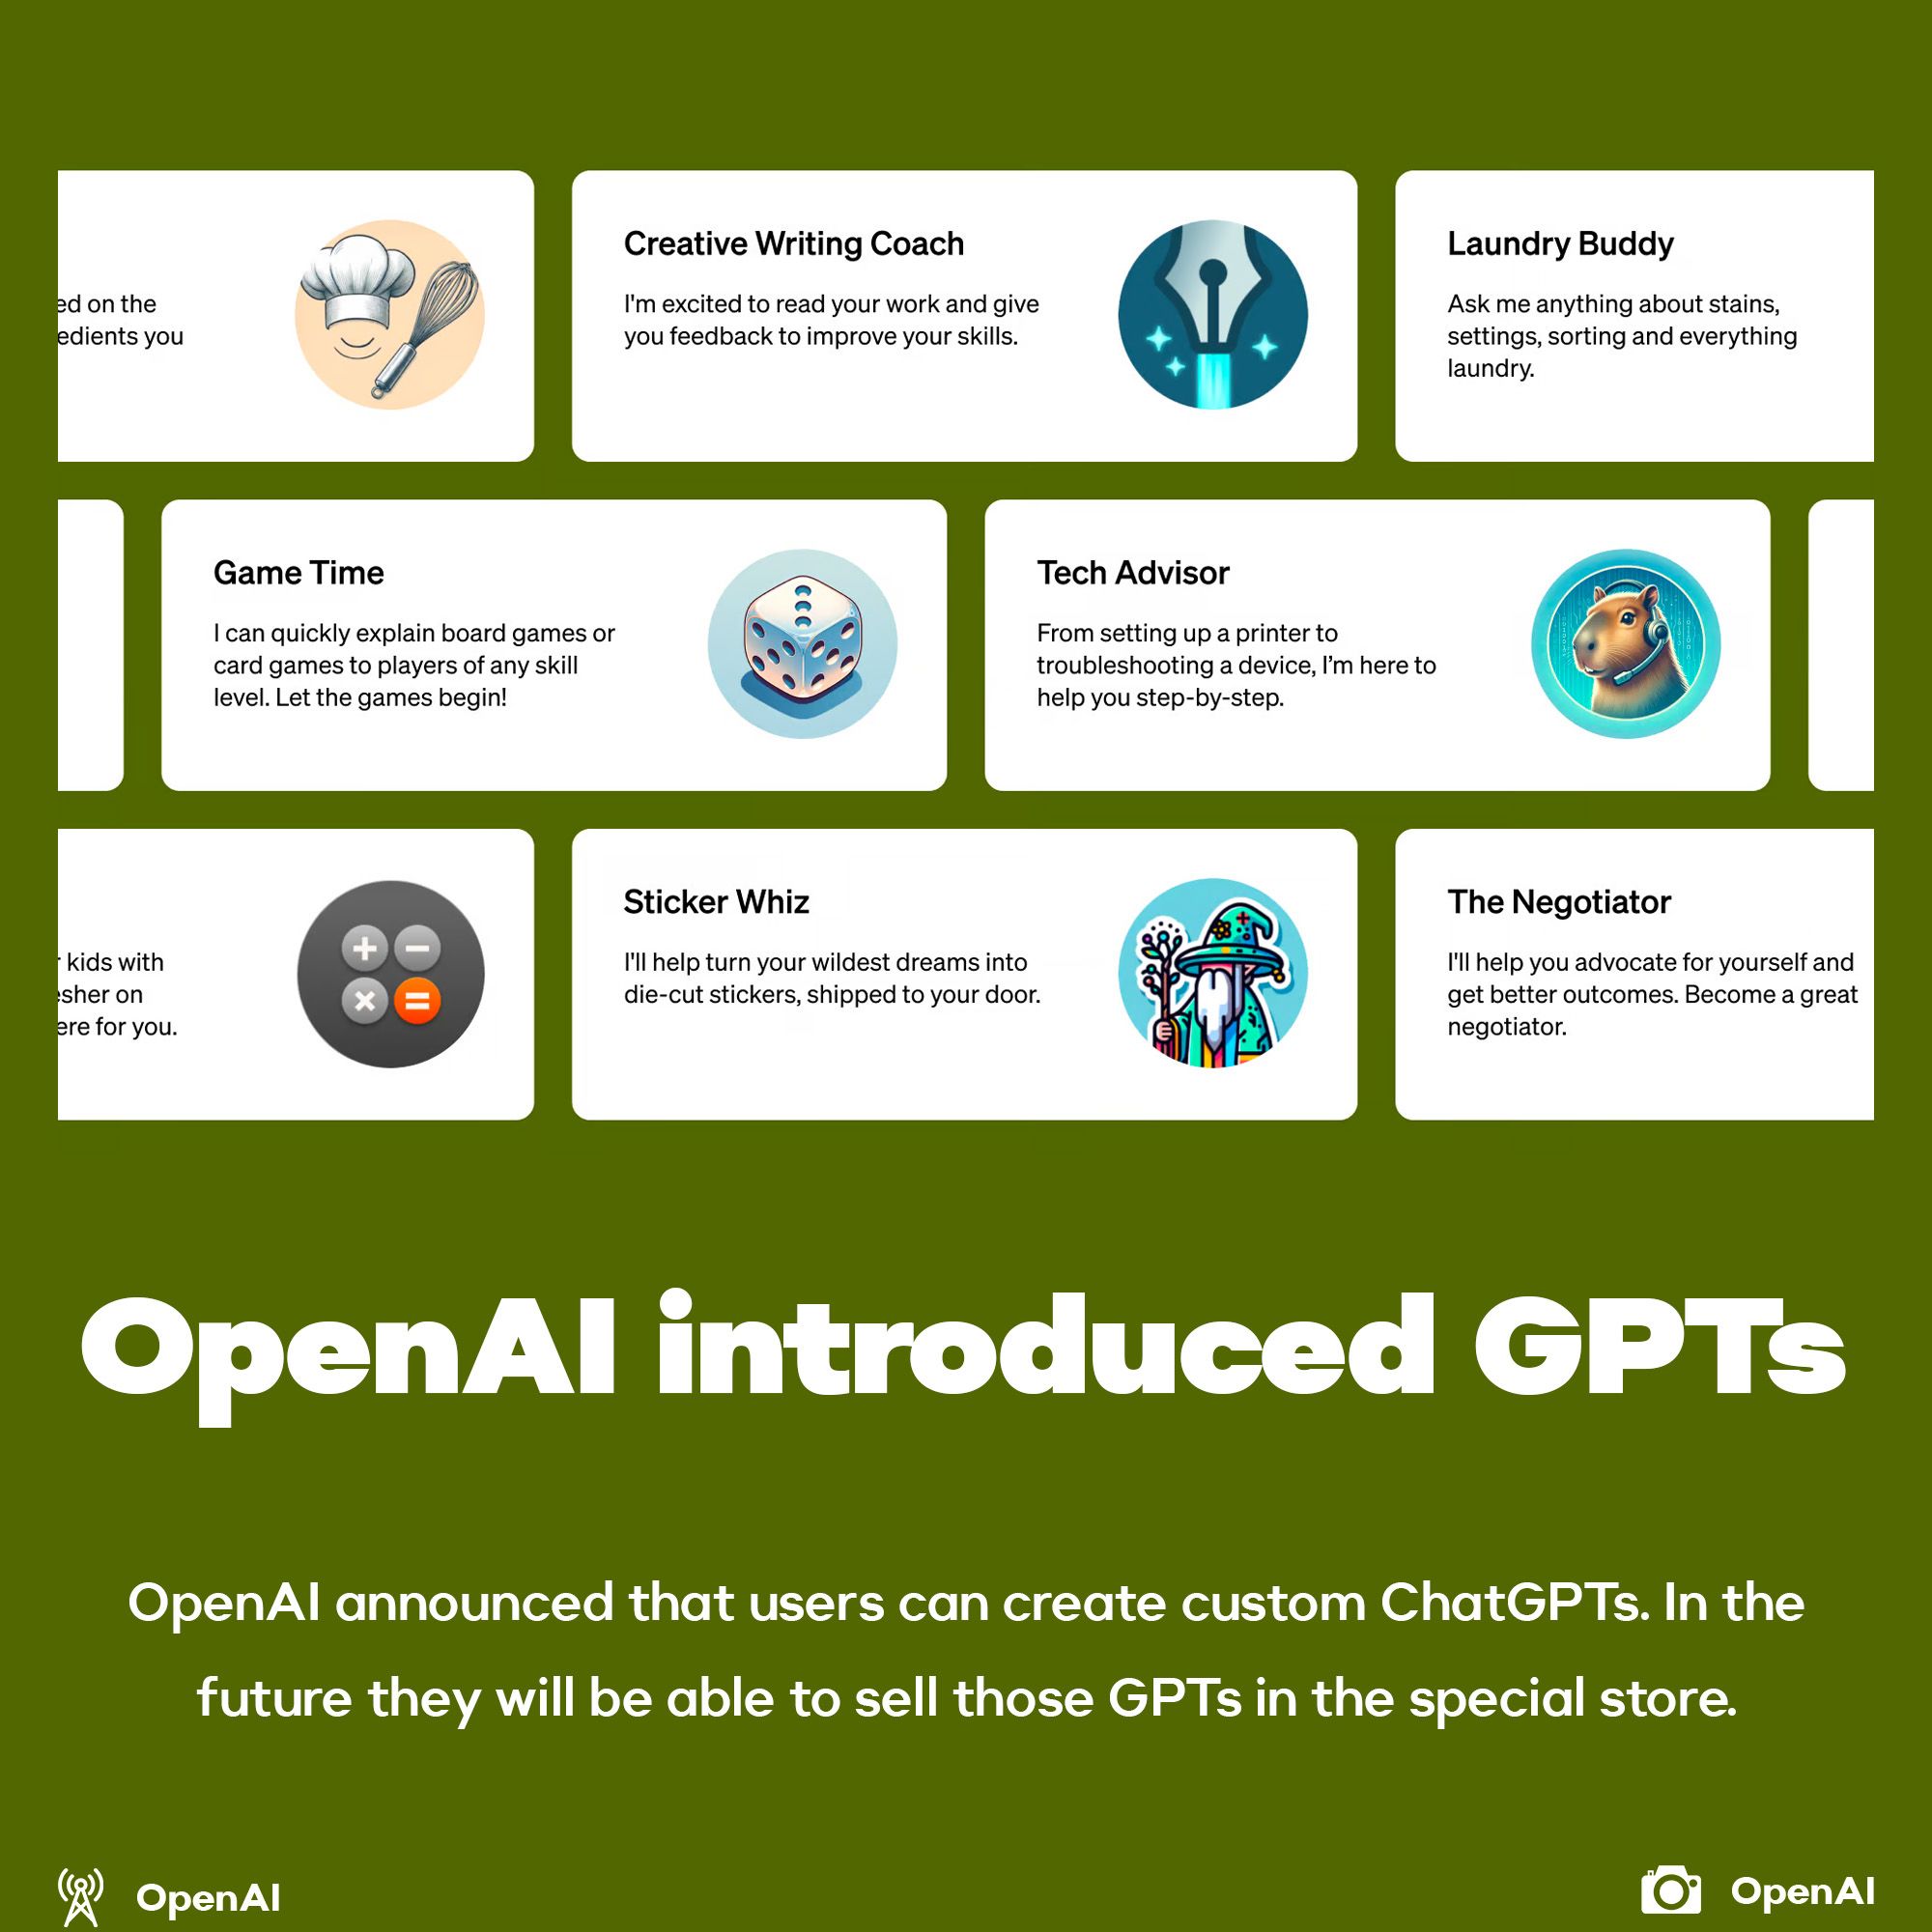 OpenAI introduced custom GPTs